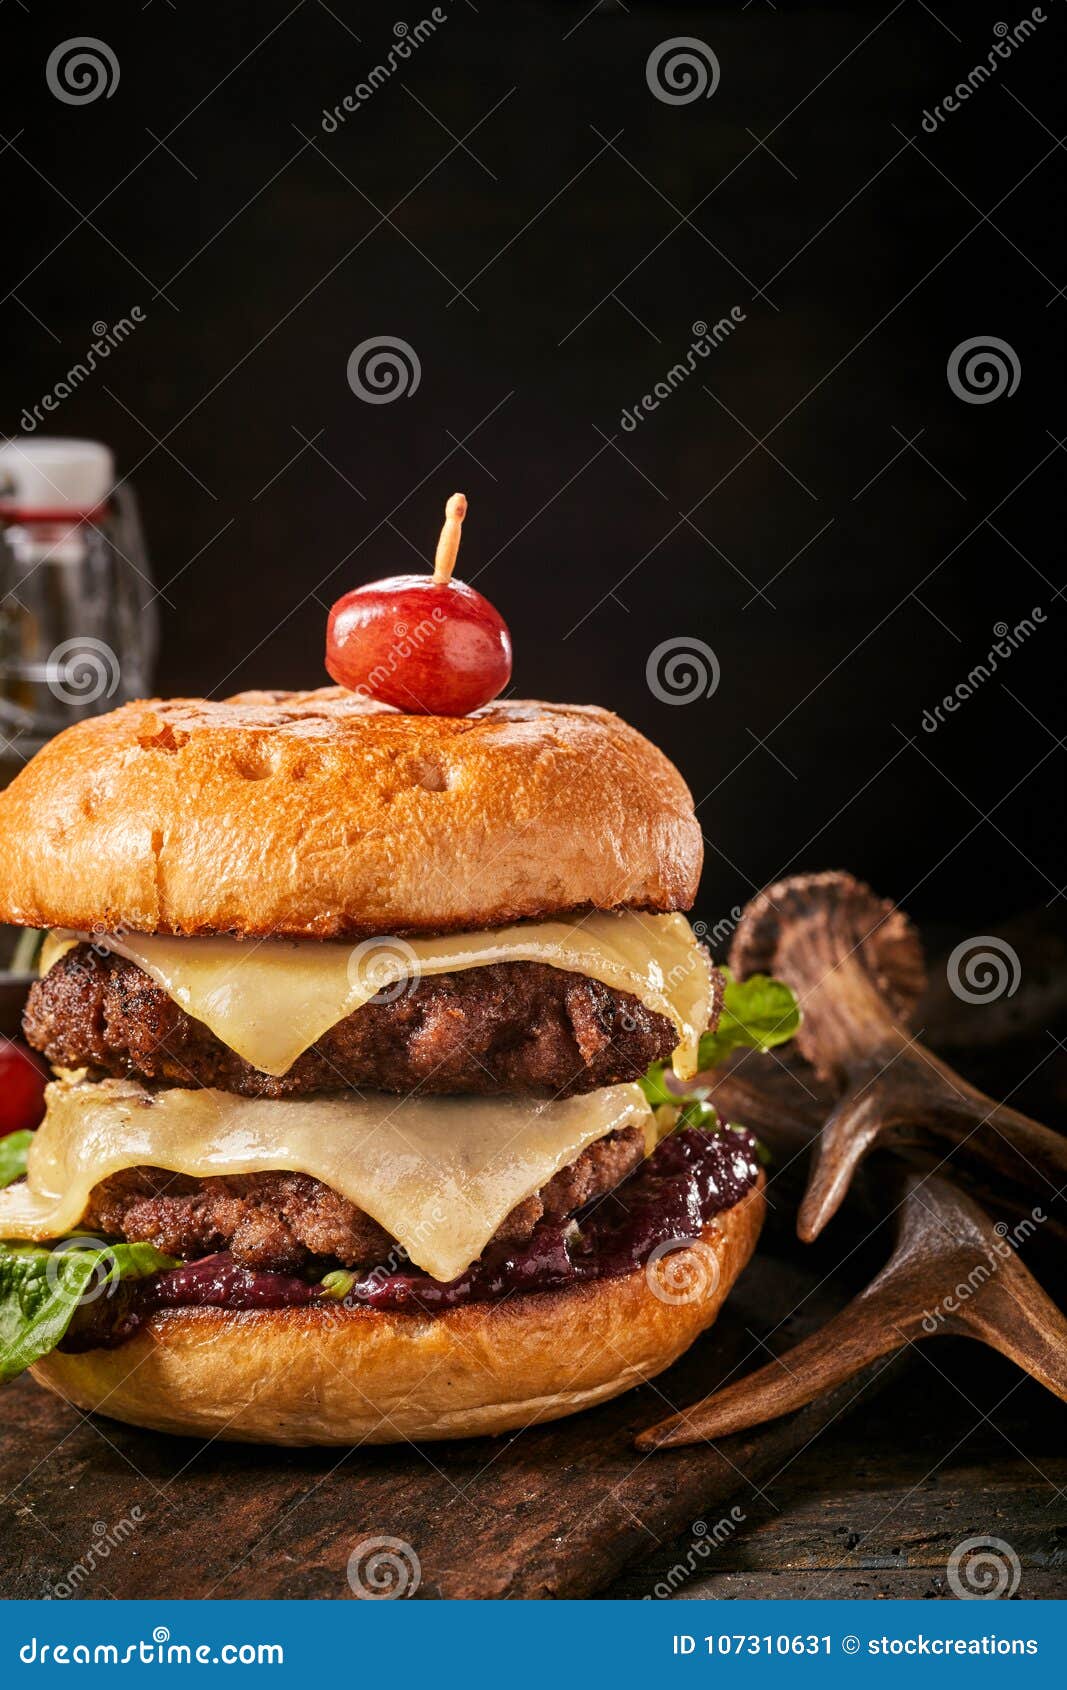 double decker cheesy venison burger